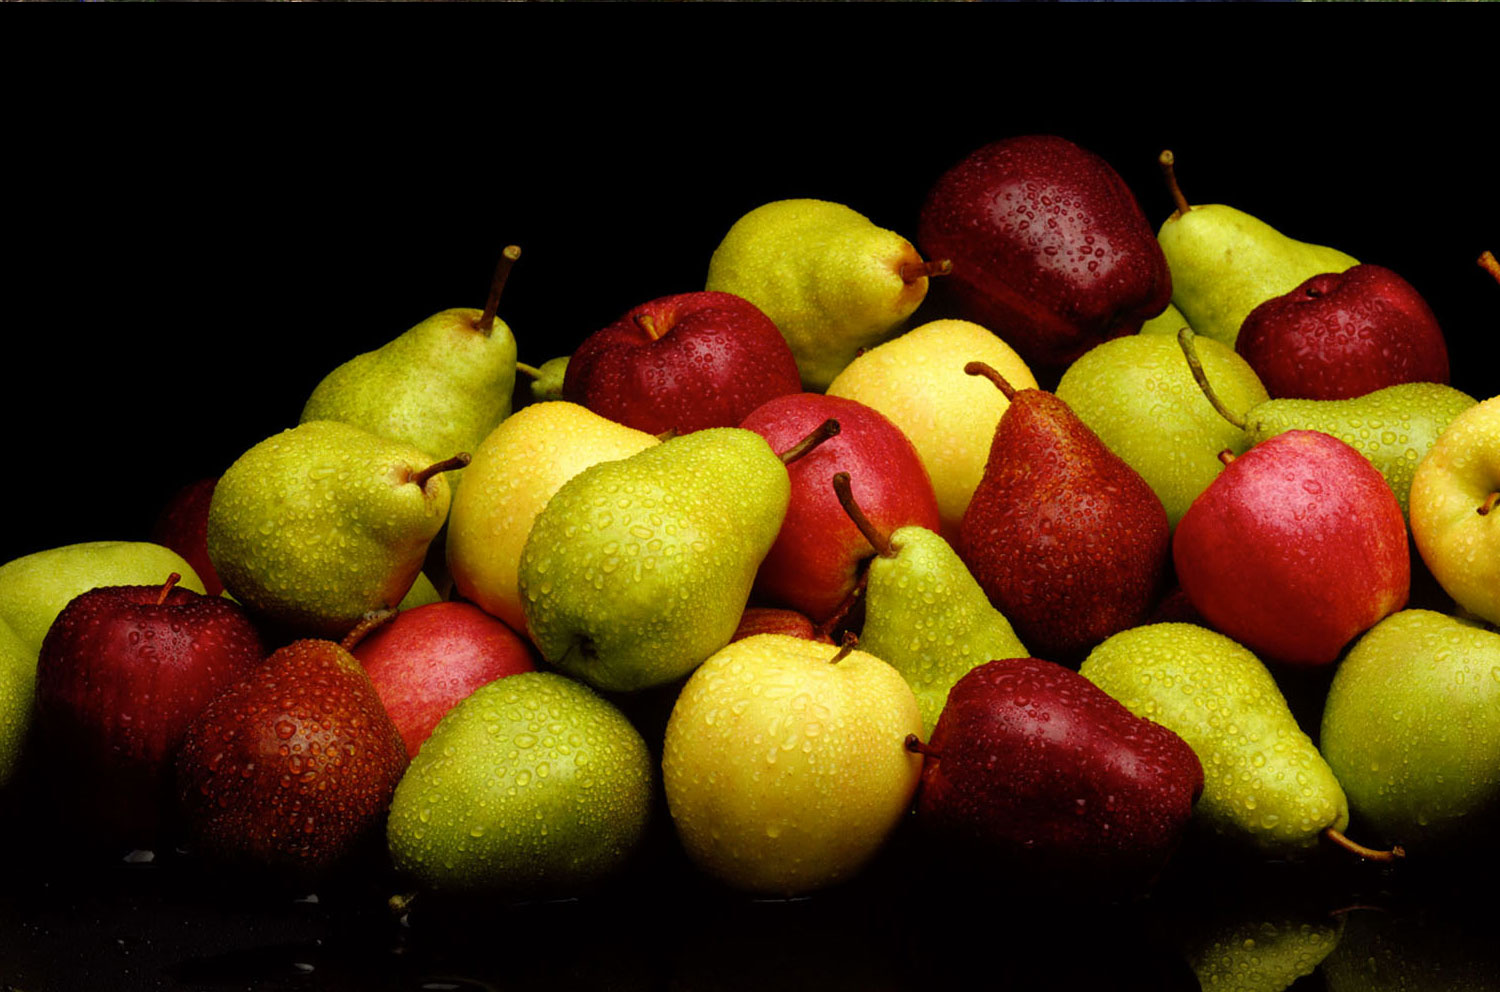 Build-A-Box Organic Apples – Chelan Ranch